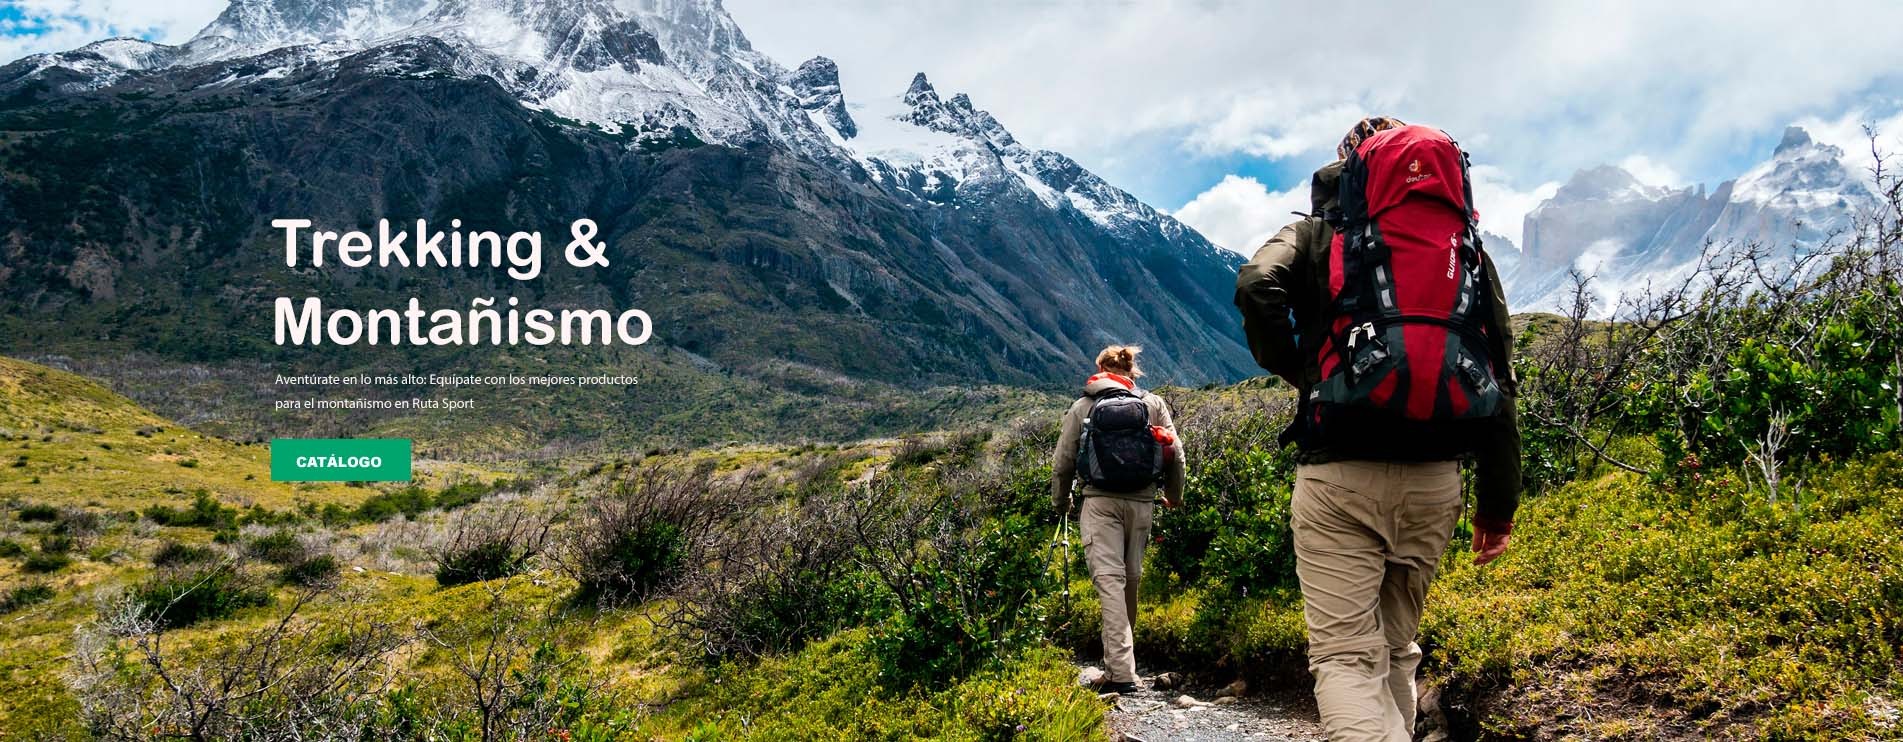 Trekking & Montañismo